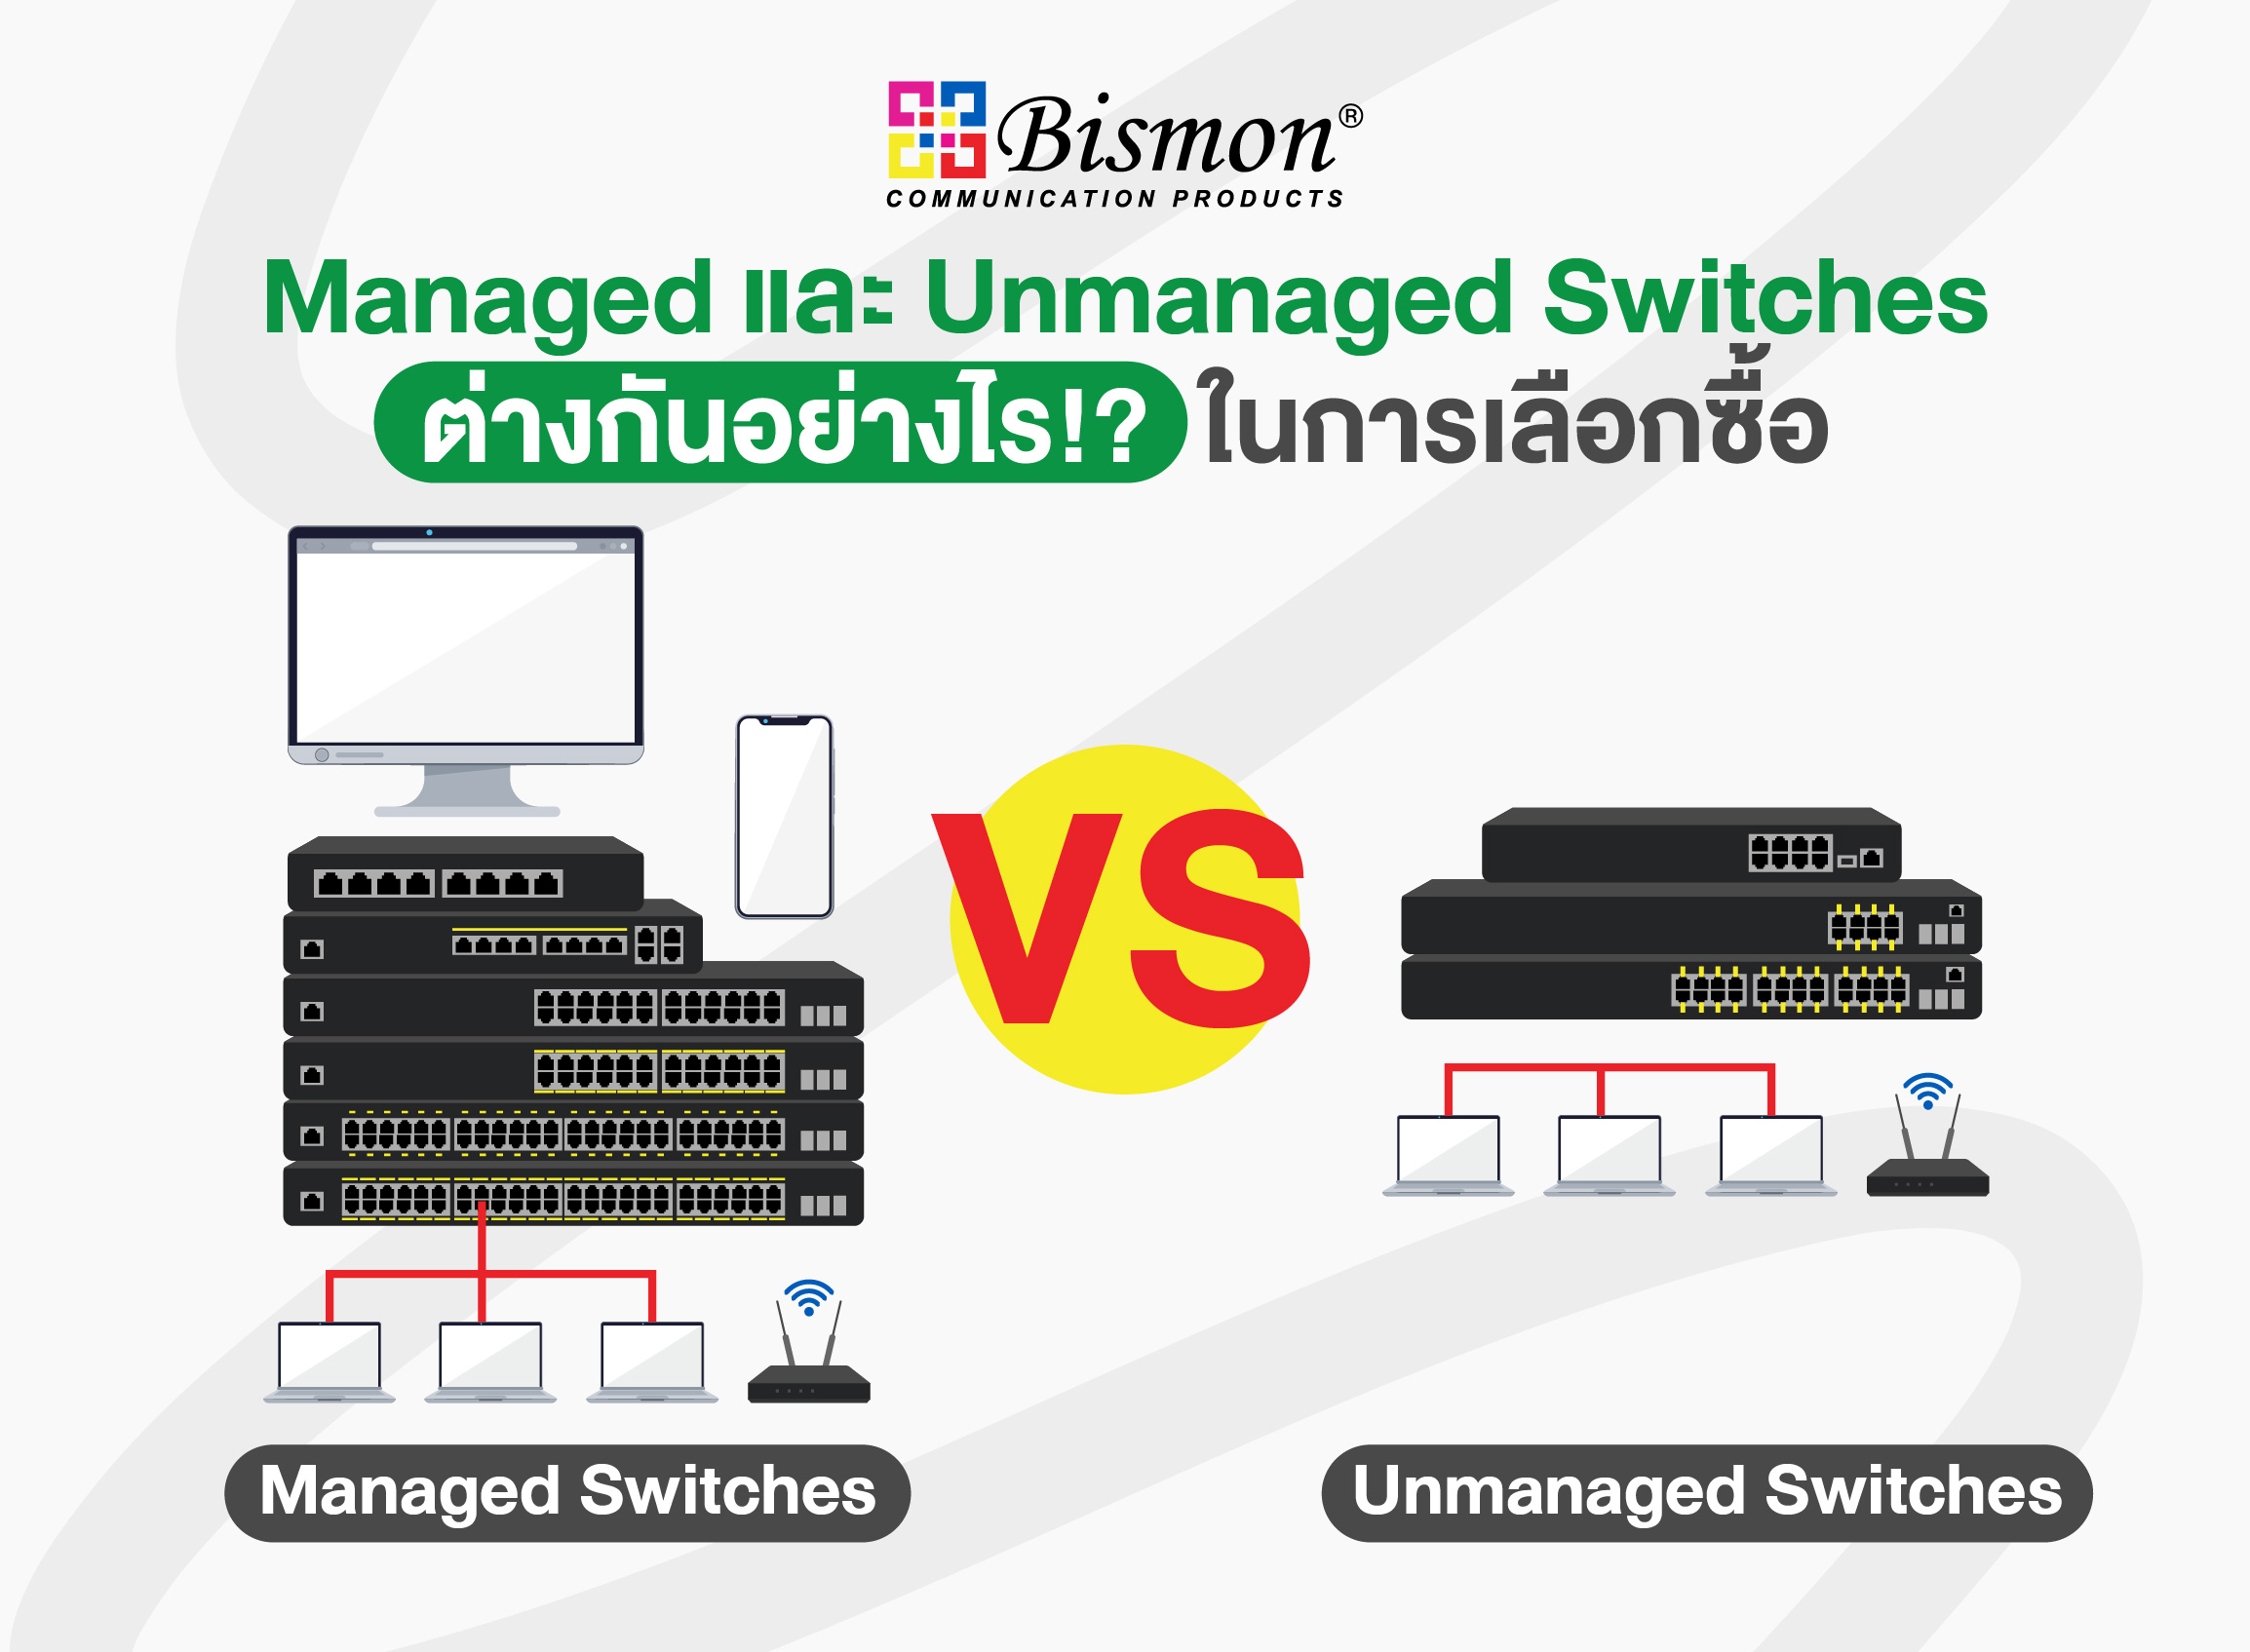 Managed vs Unmanaged Switches แตกต่างกันอย่างไร?